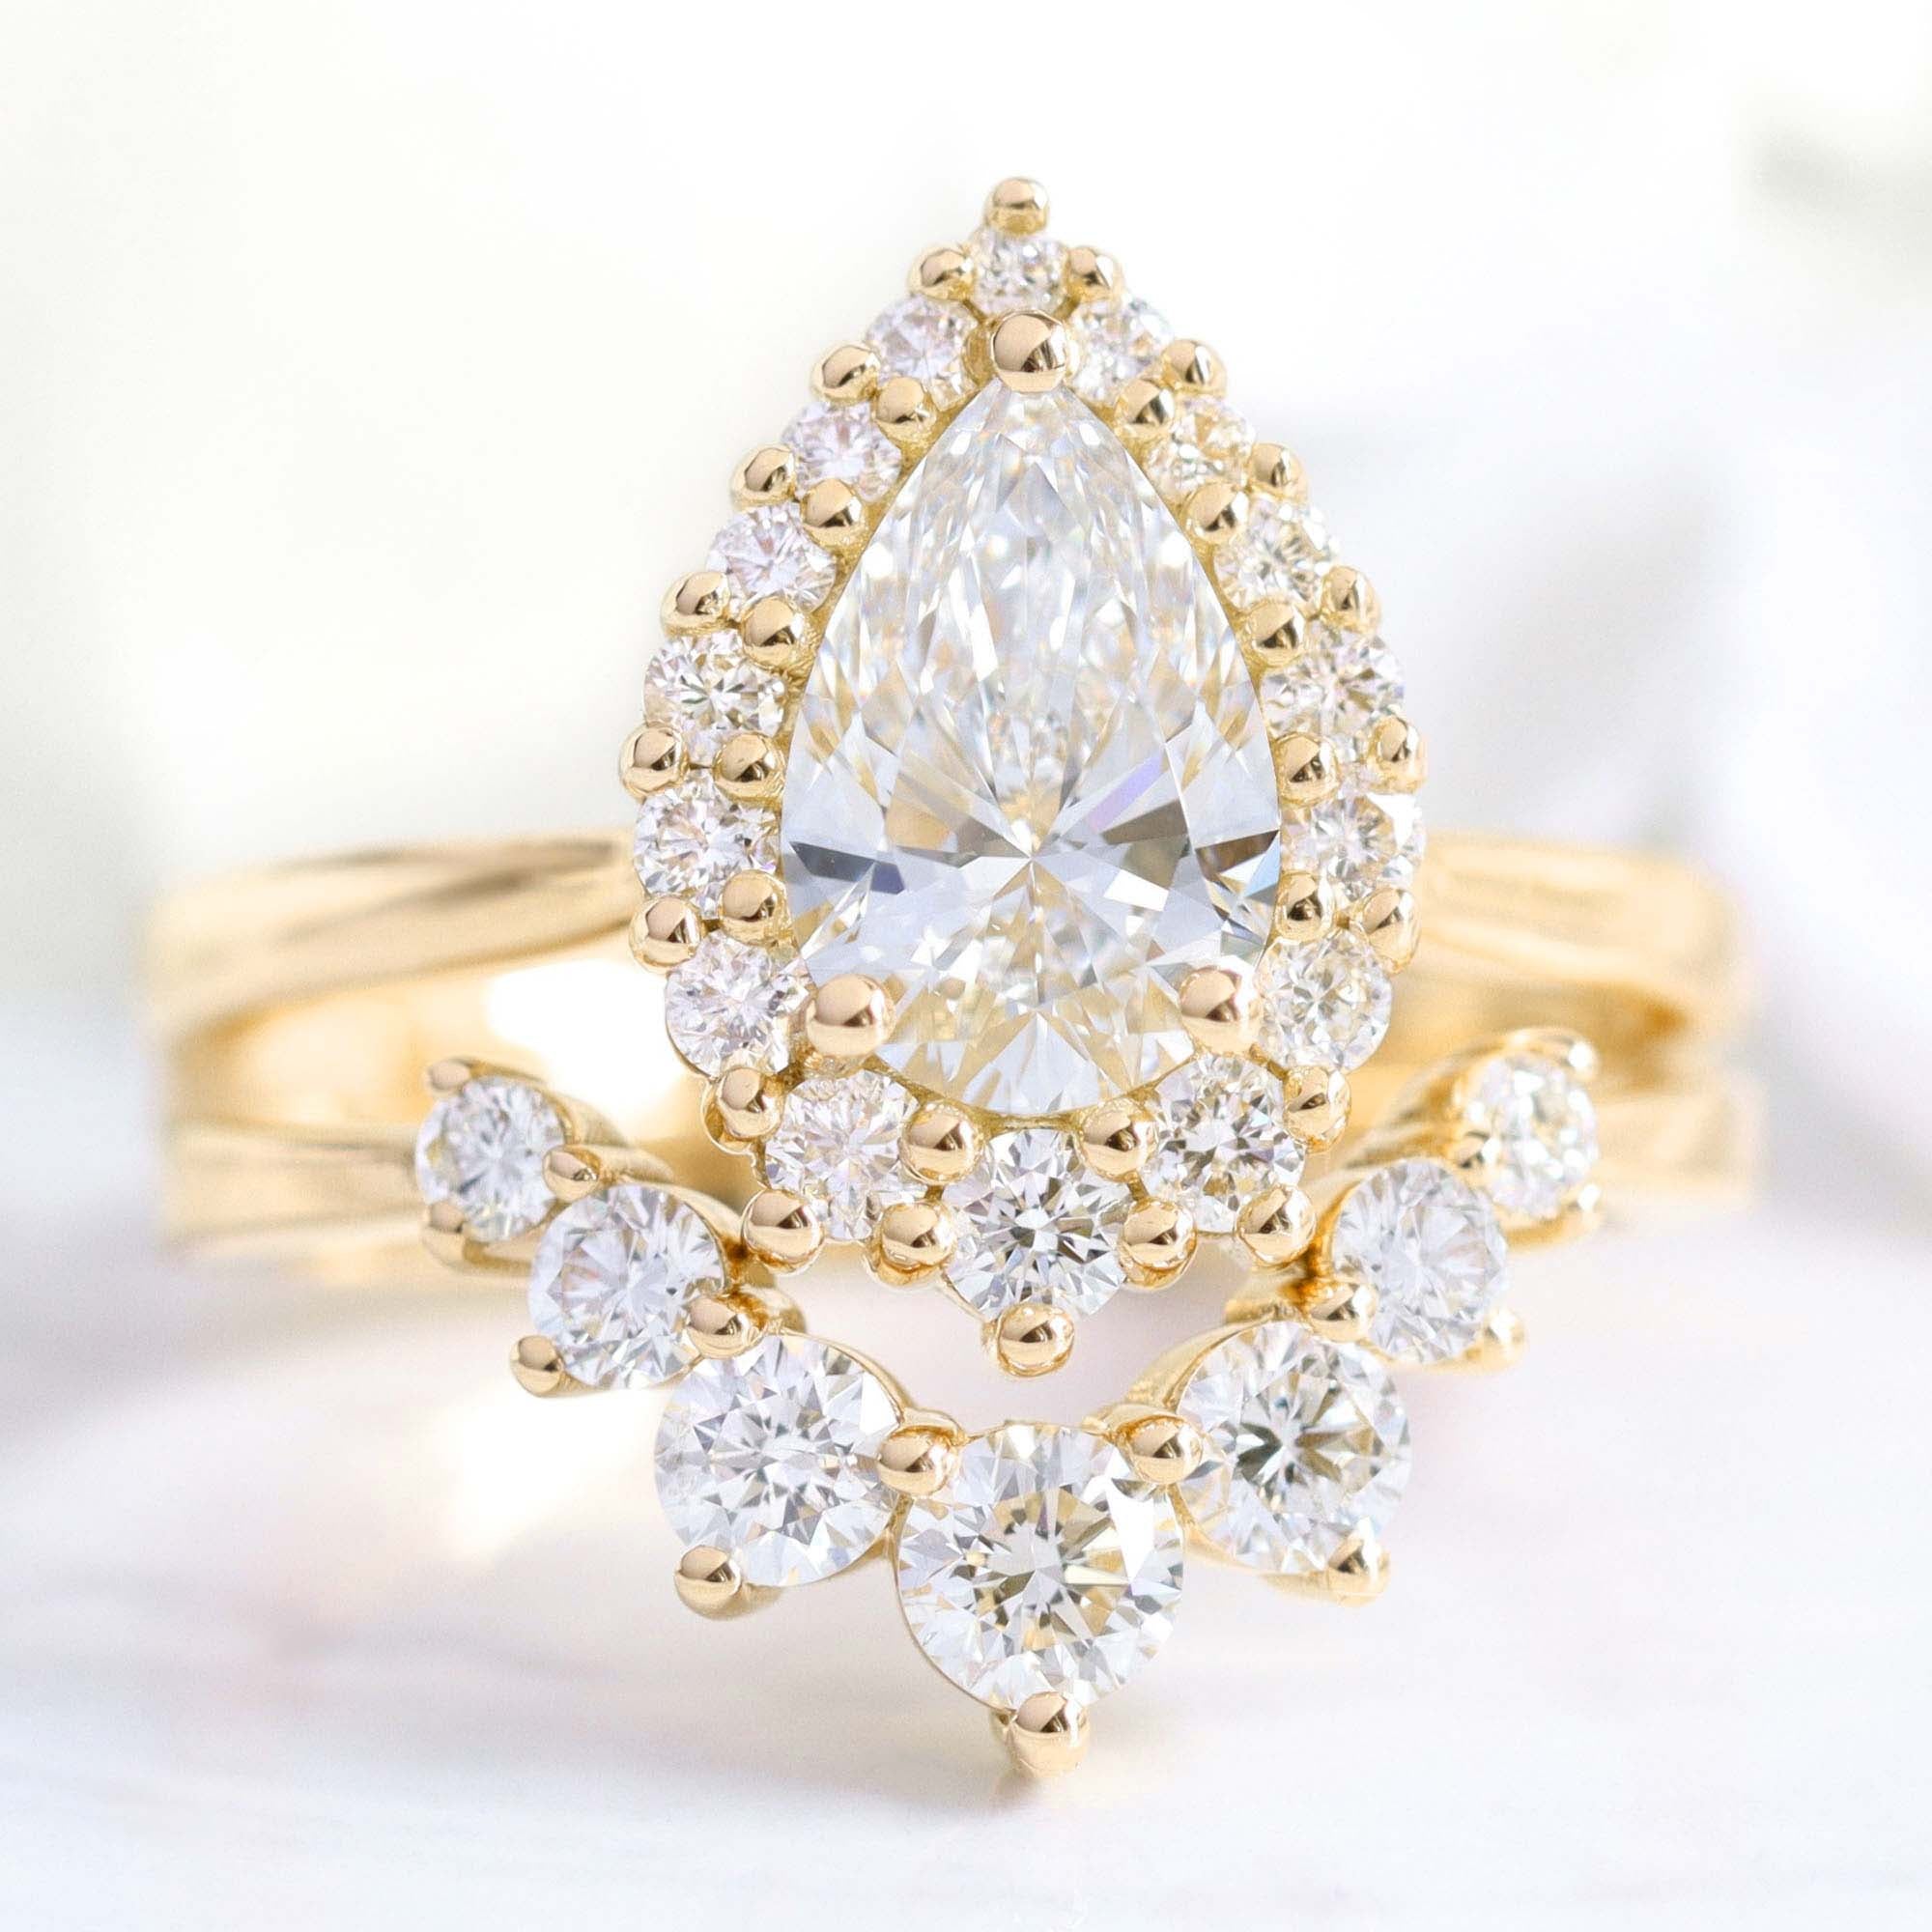 lab diamond ring stack yellow gold pear diamond halo engagement ring set La More Design Jewelry